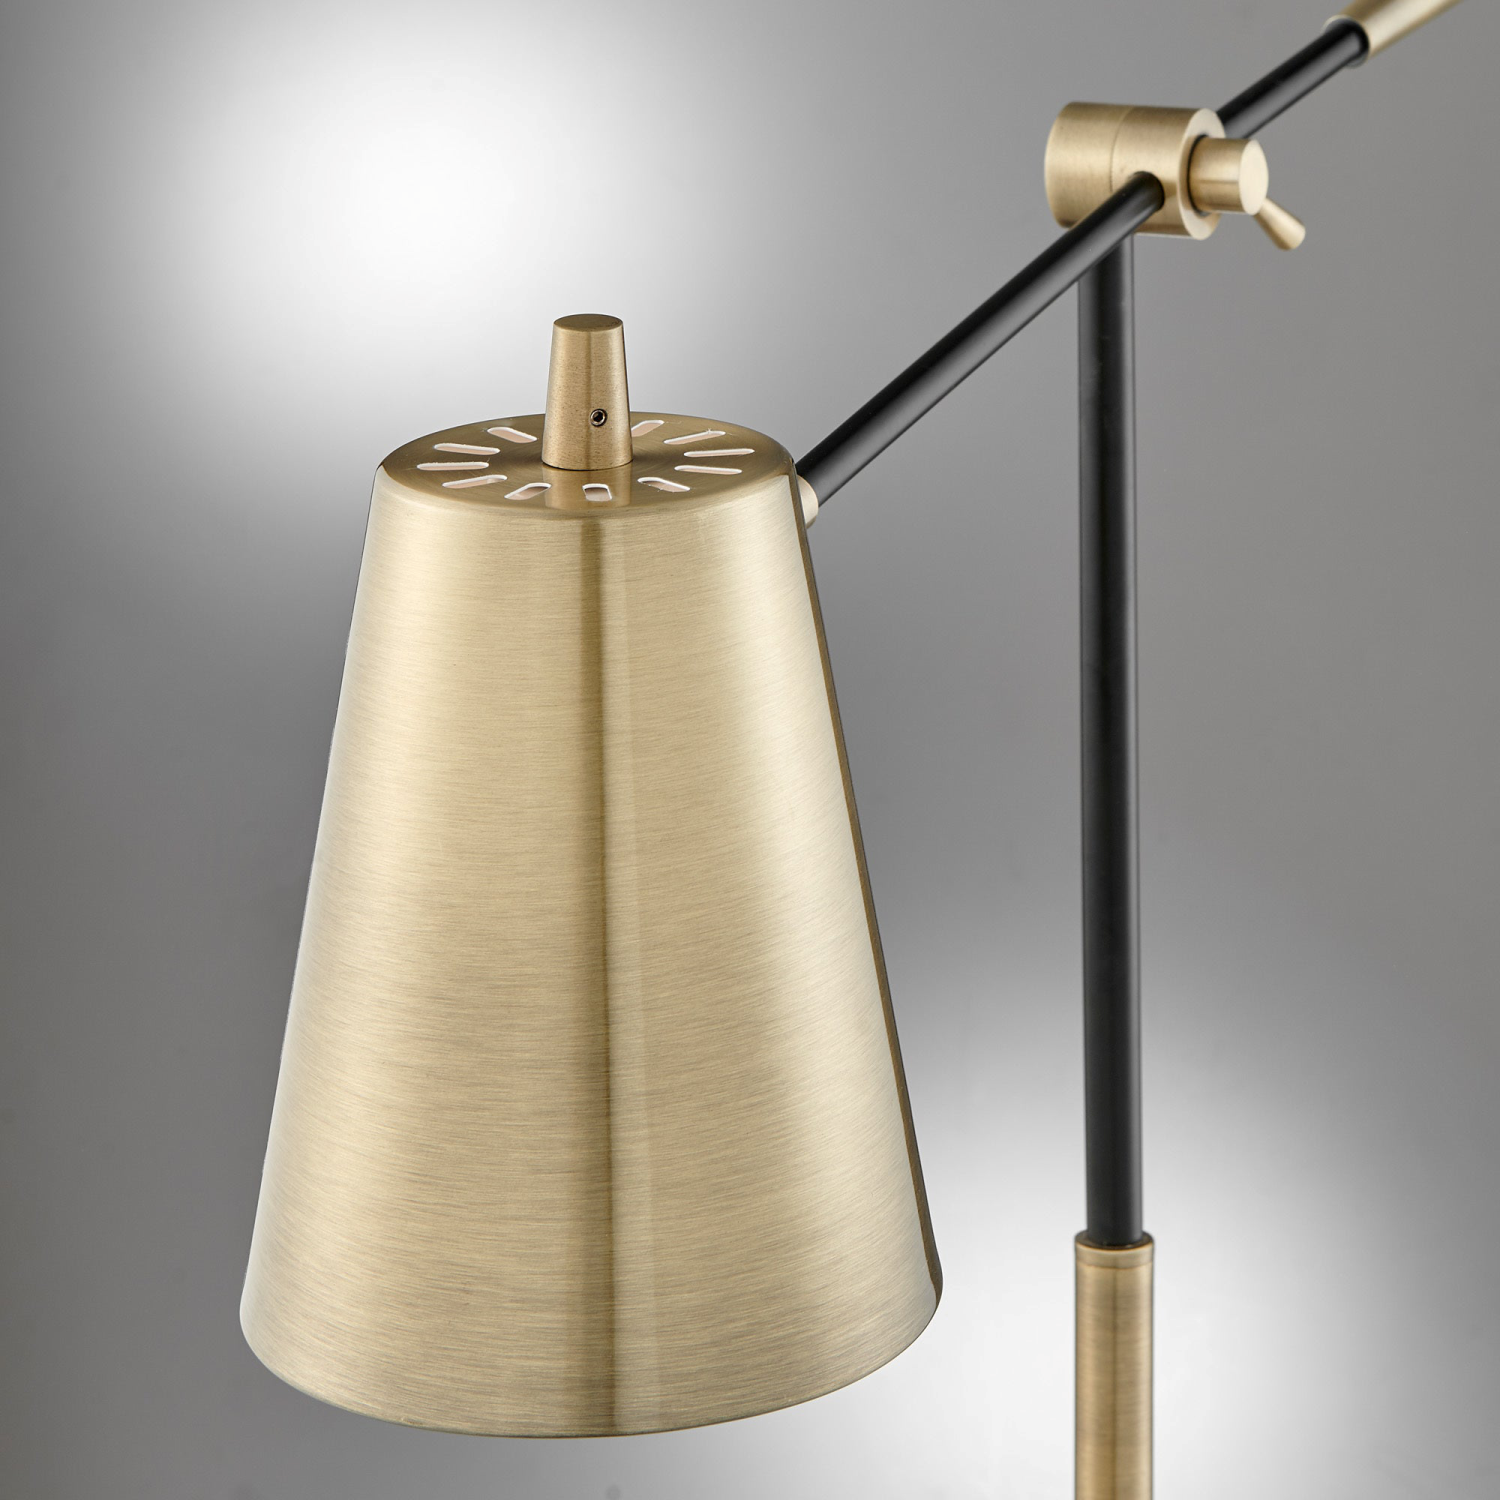 Salma Desk Lamp Close Up of Lamp Head with Light Switch Knob